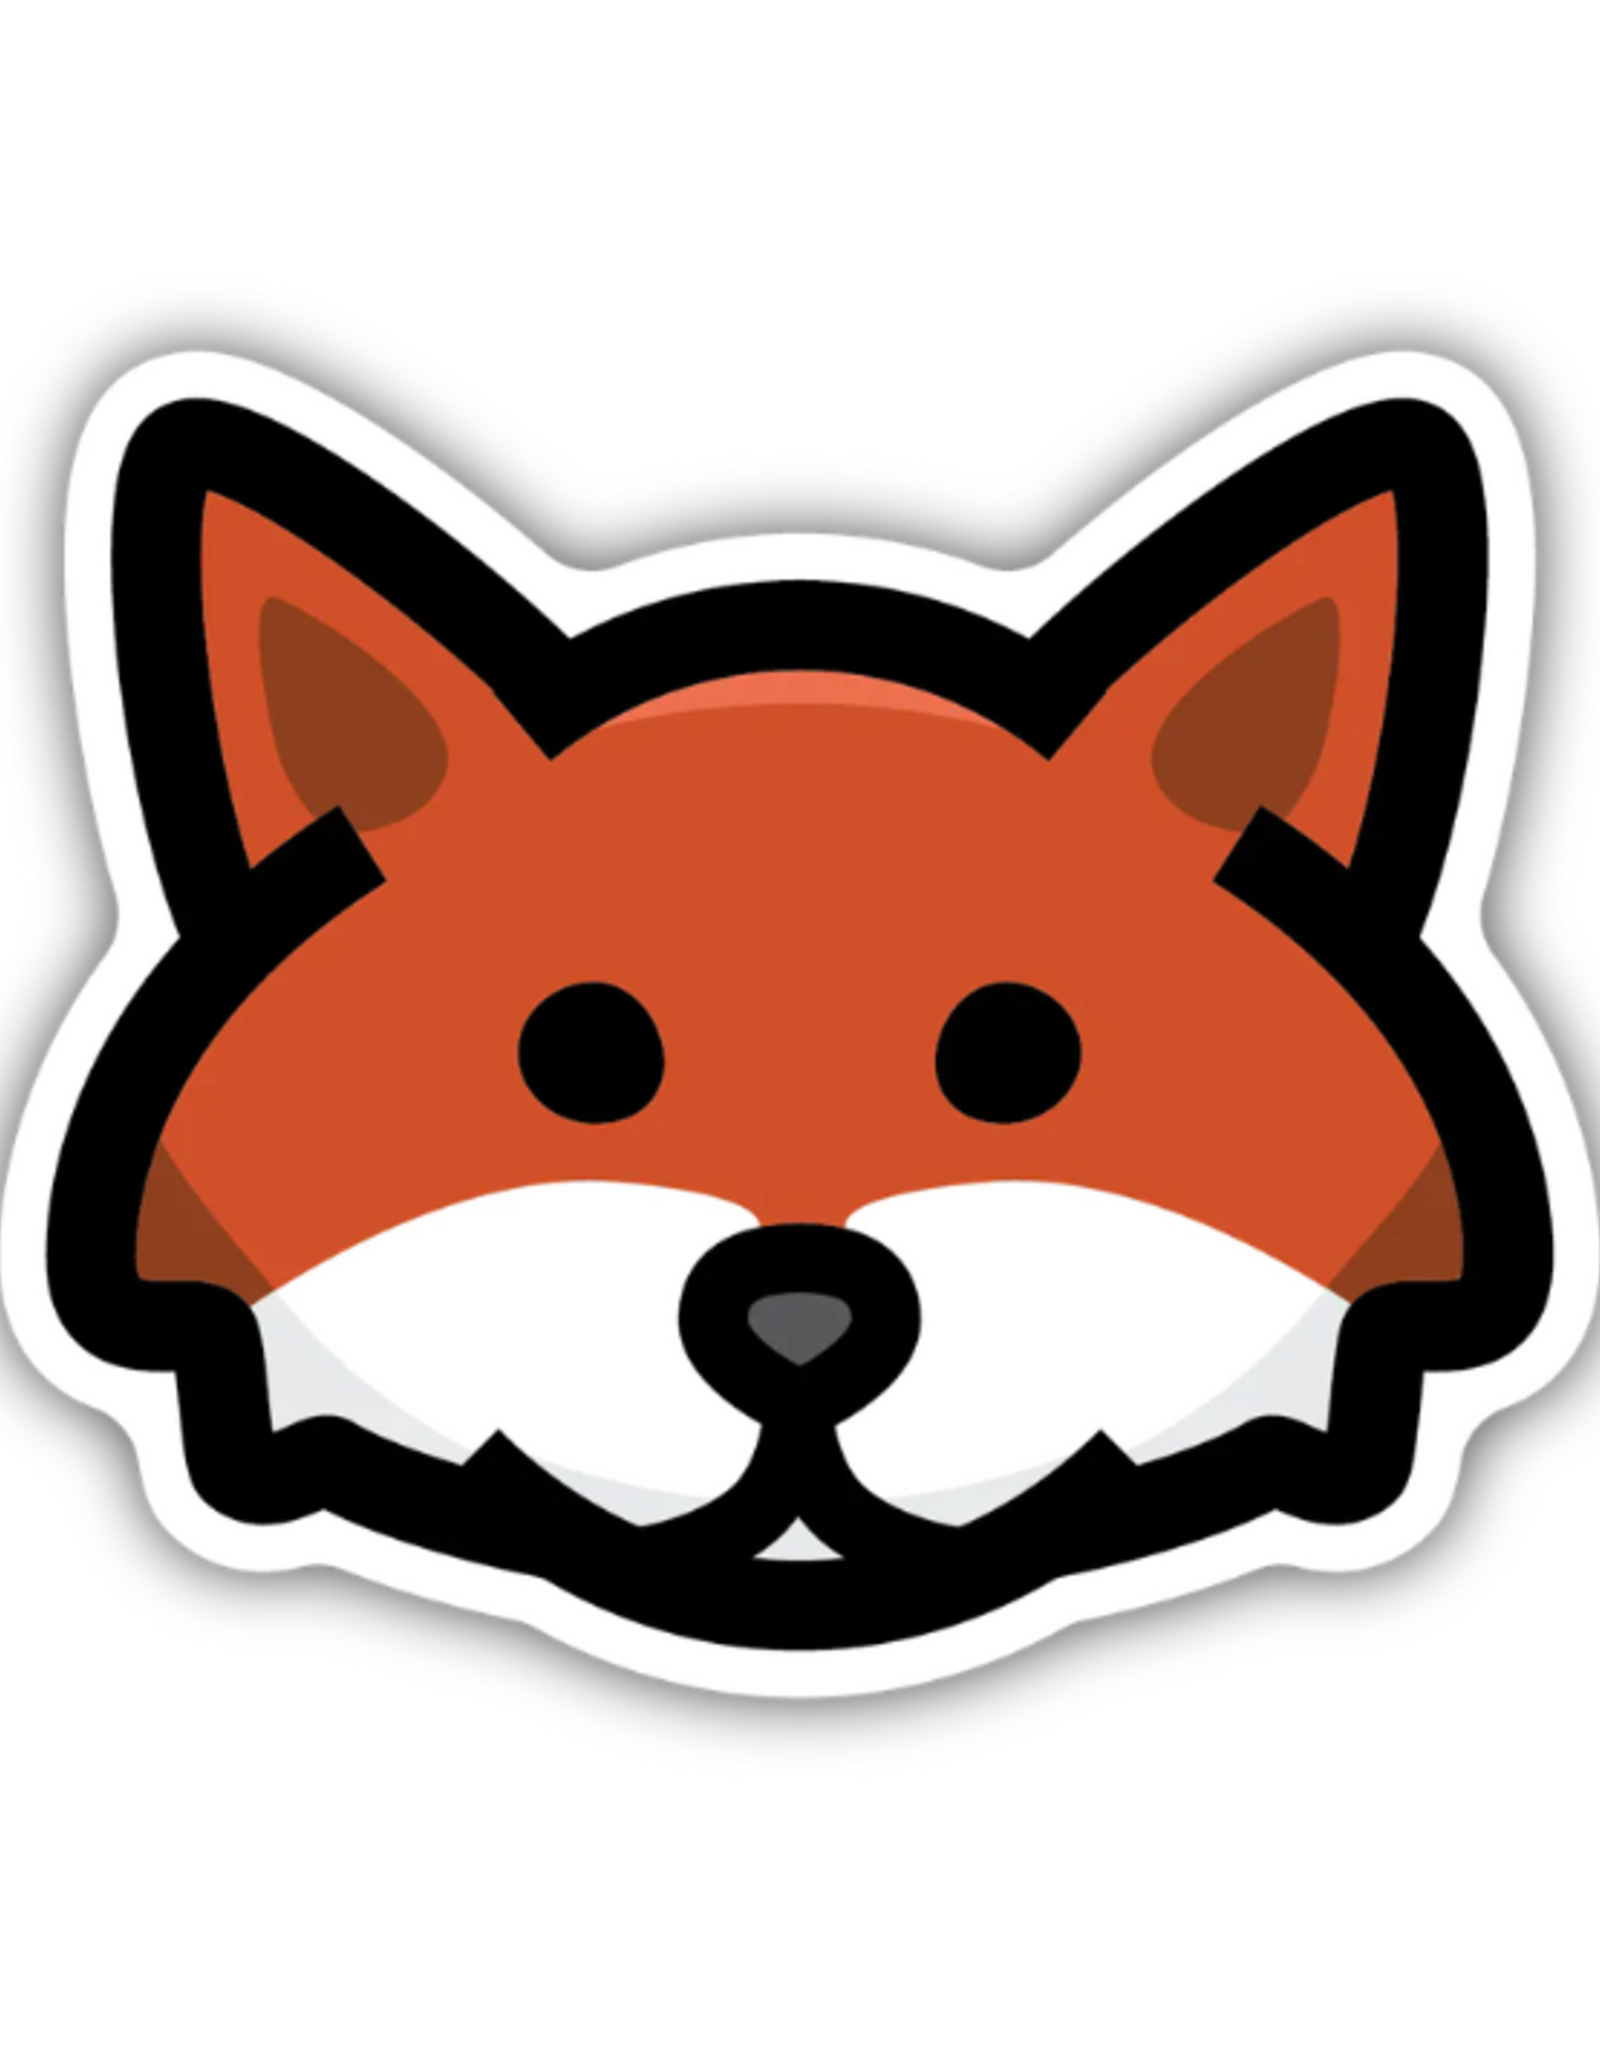 Stickers Northwest Inc. Stickers Northwest Inc. - Fox Face Sticker